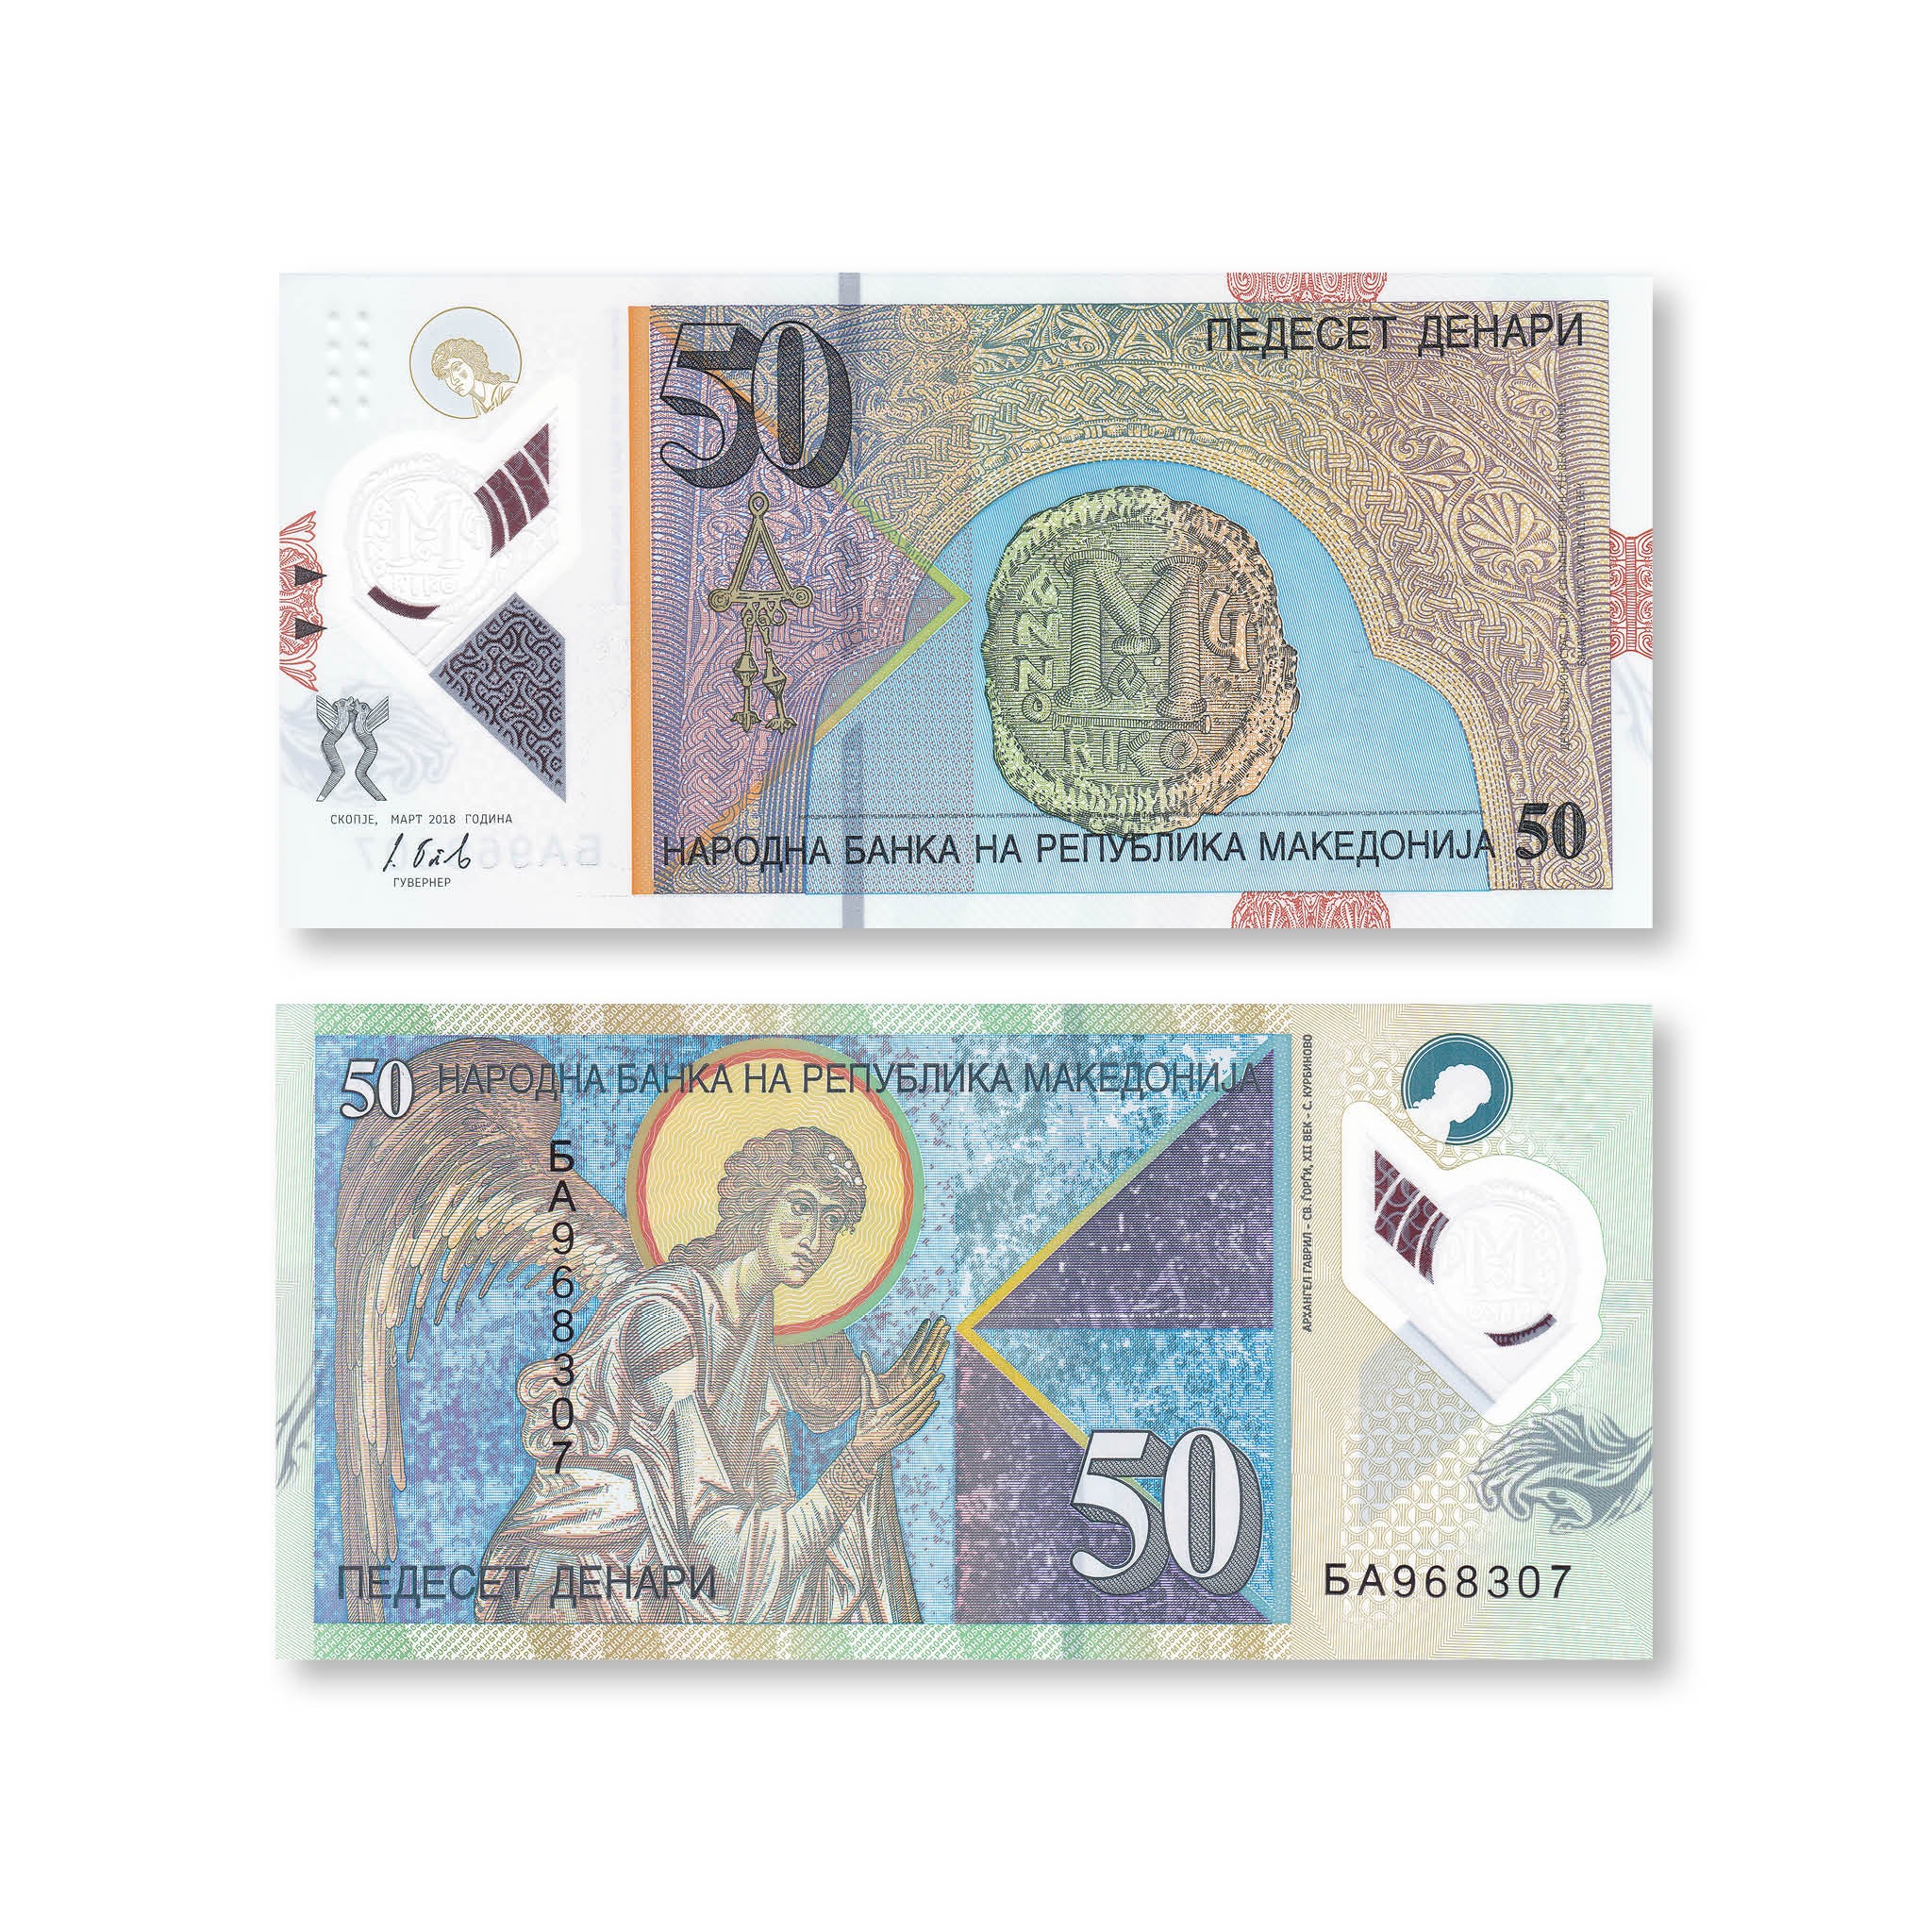 Macedonia 50 Denari, 2018, B218a, P26, UNC - Robert's World Money - World Banknotes